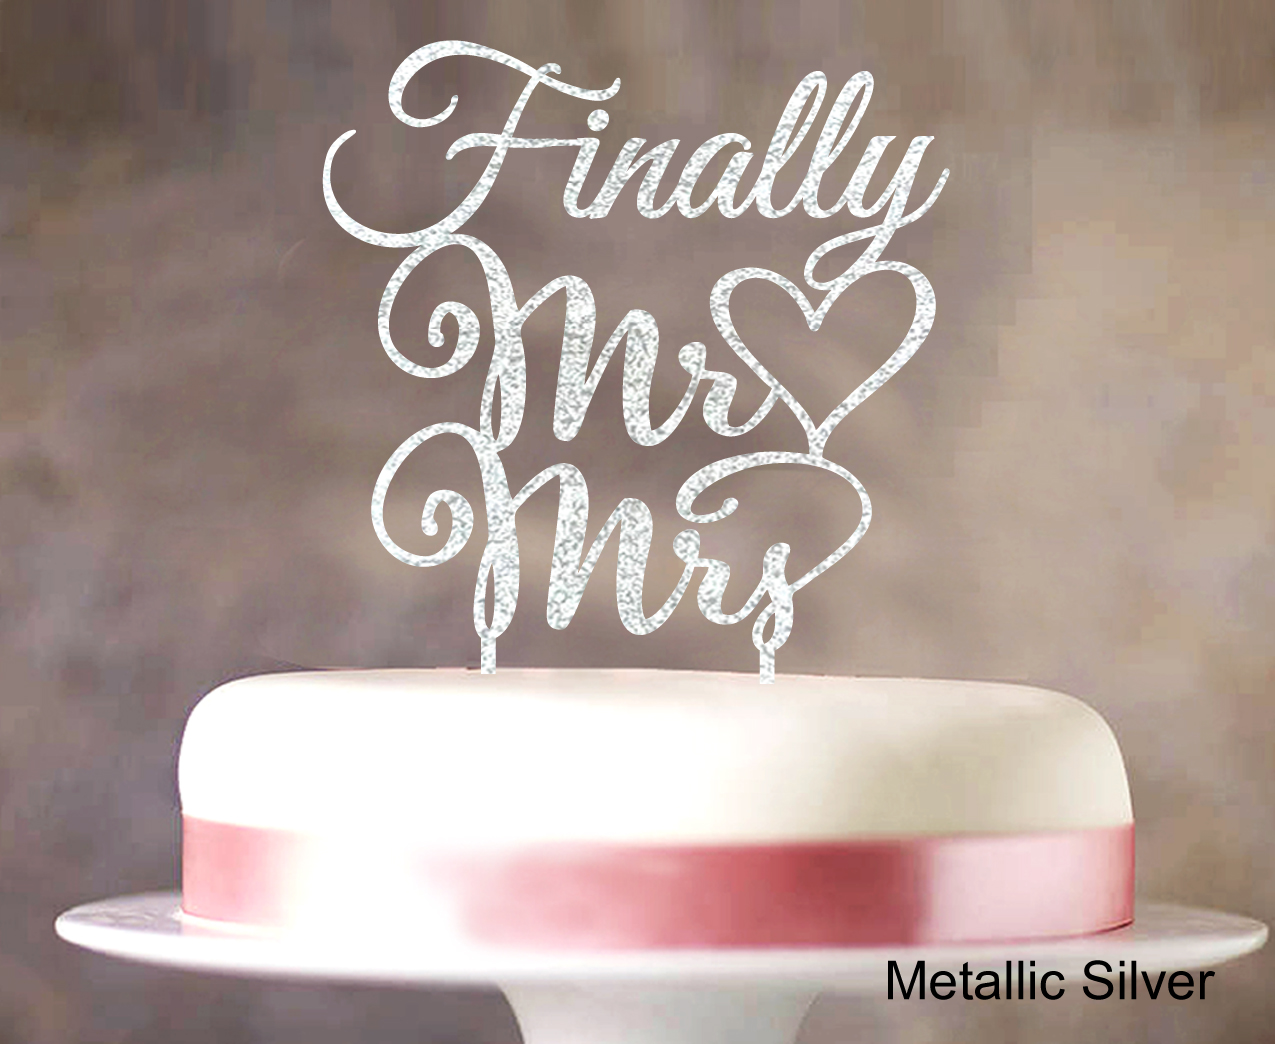 show original title Details about   Pair Couple-Wedding-Cake favors-decorations-marks table